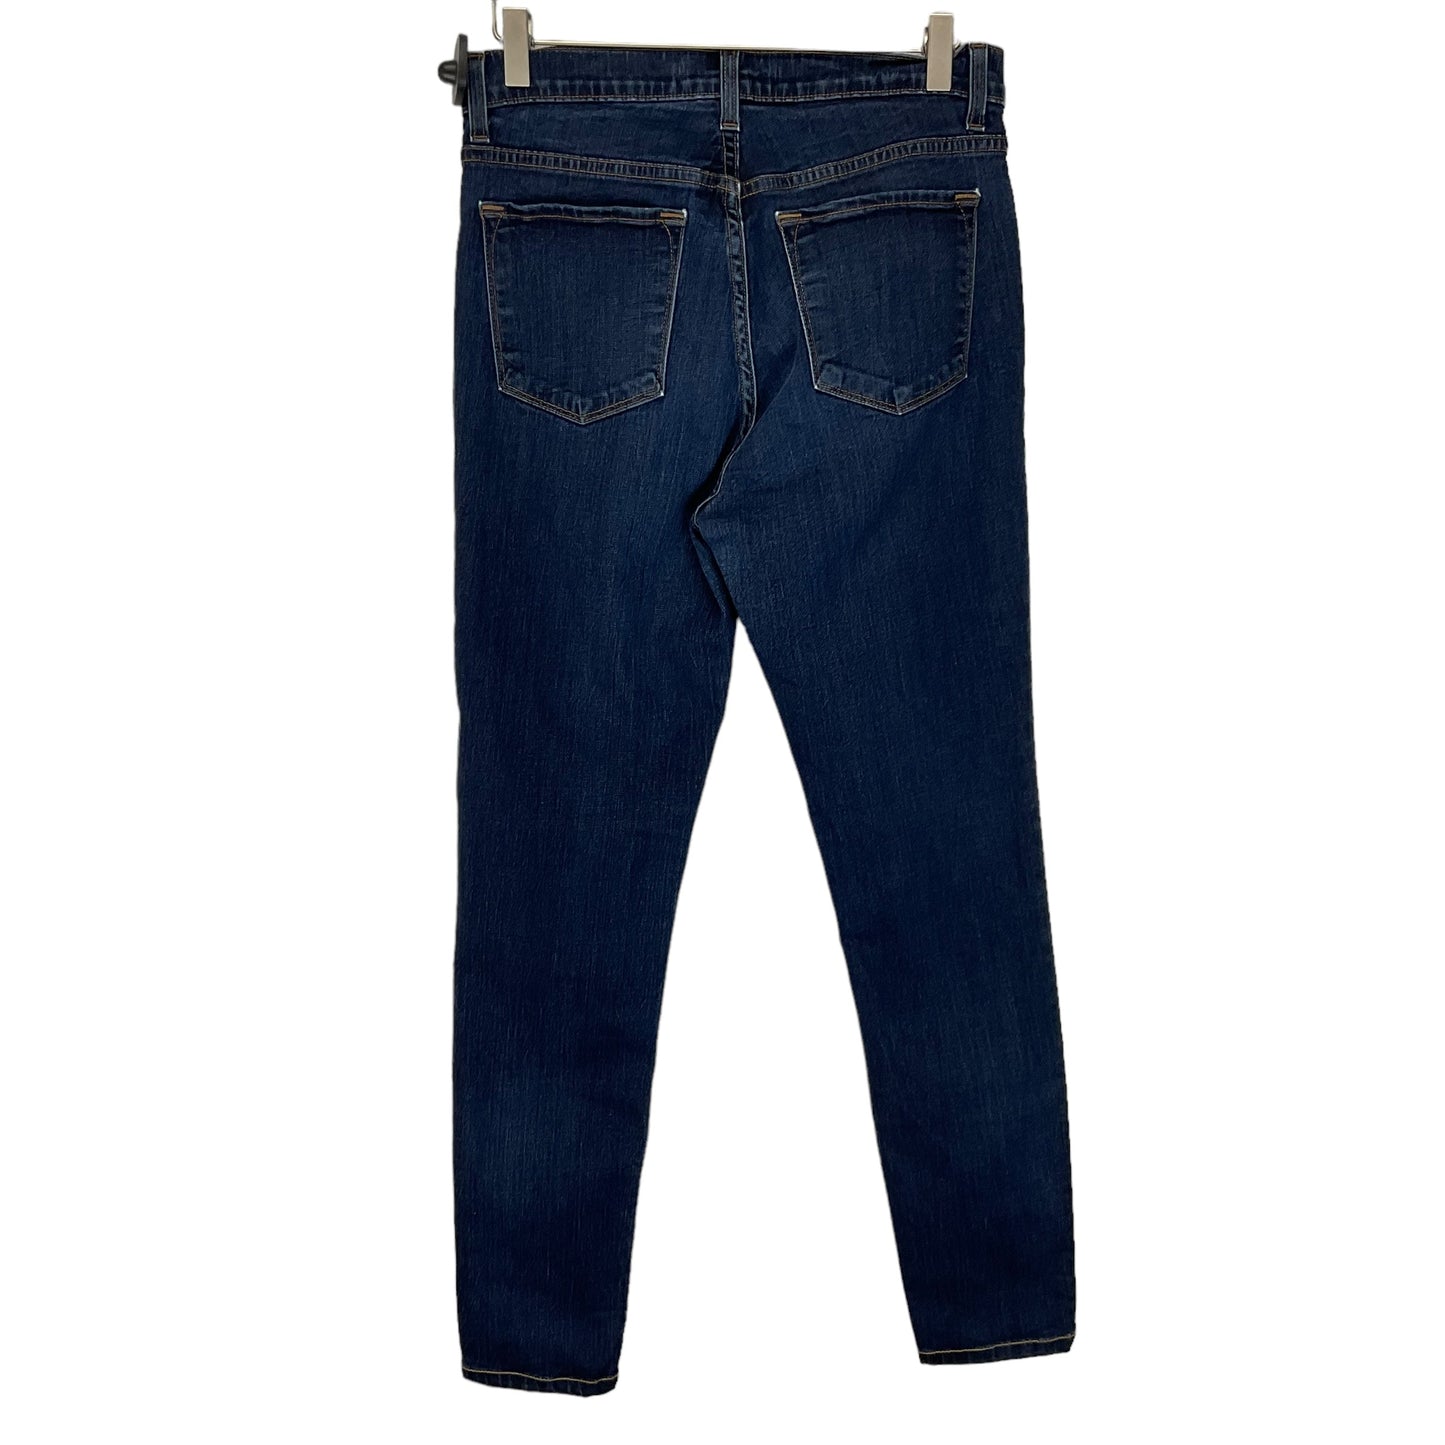 Blue Denim Jeans Straight J Brand, Size 6